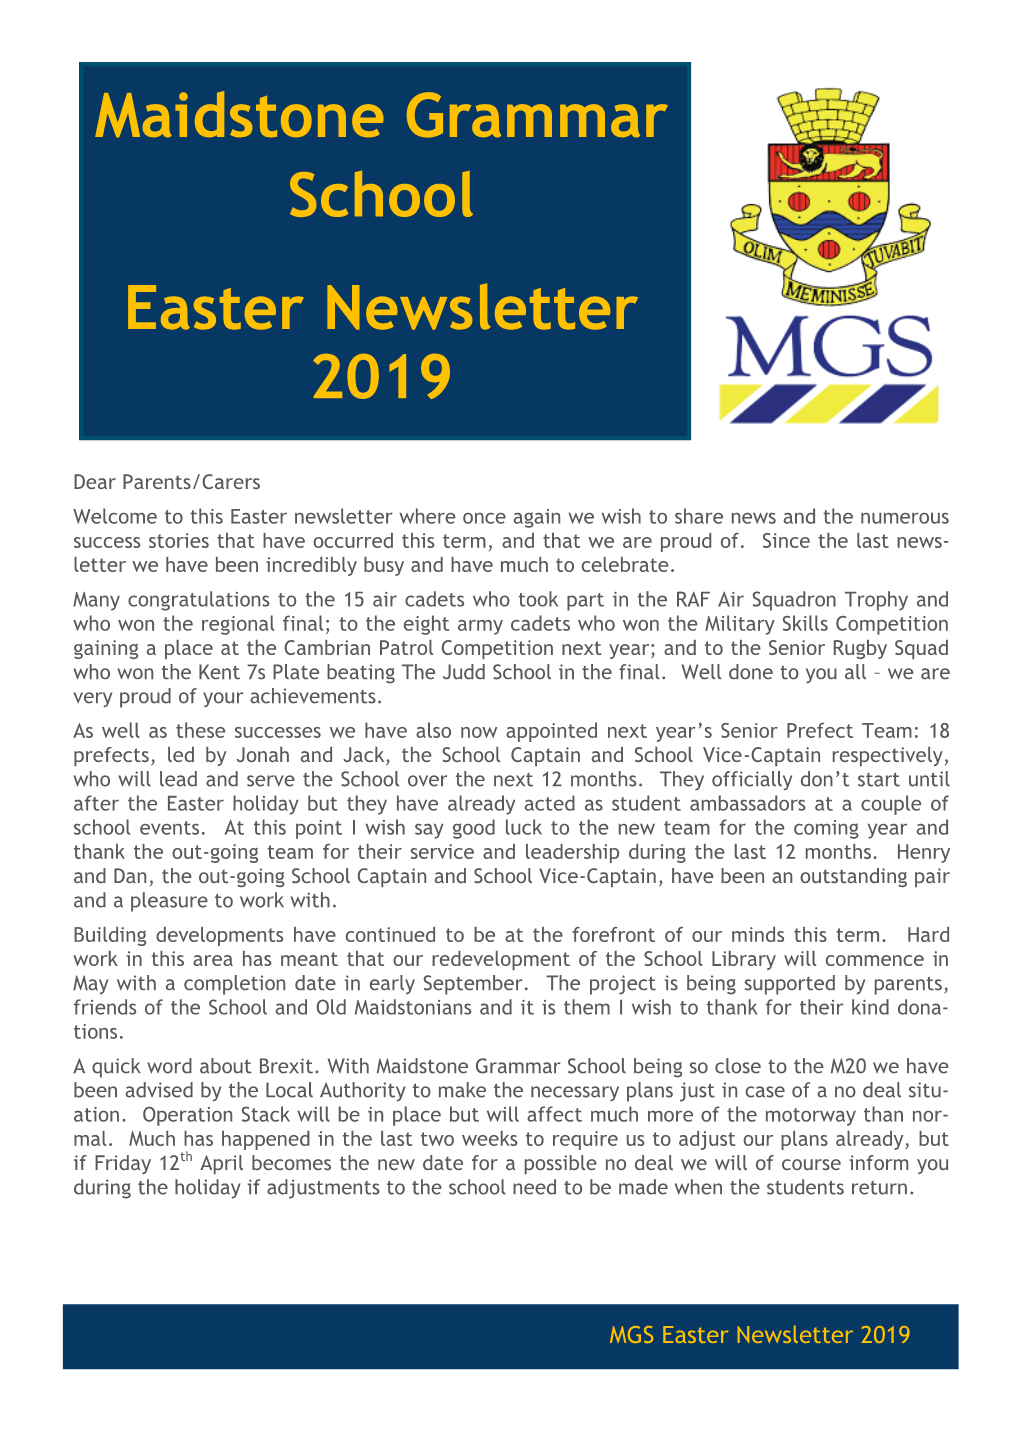 Maidstone Grammar School Easter Newsletter 2019